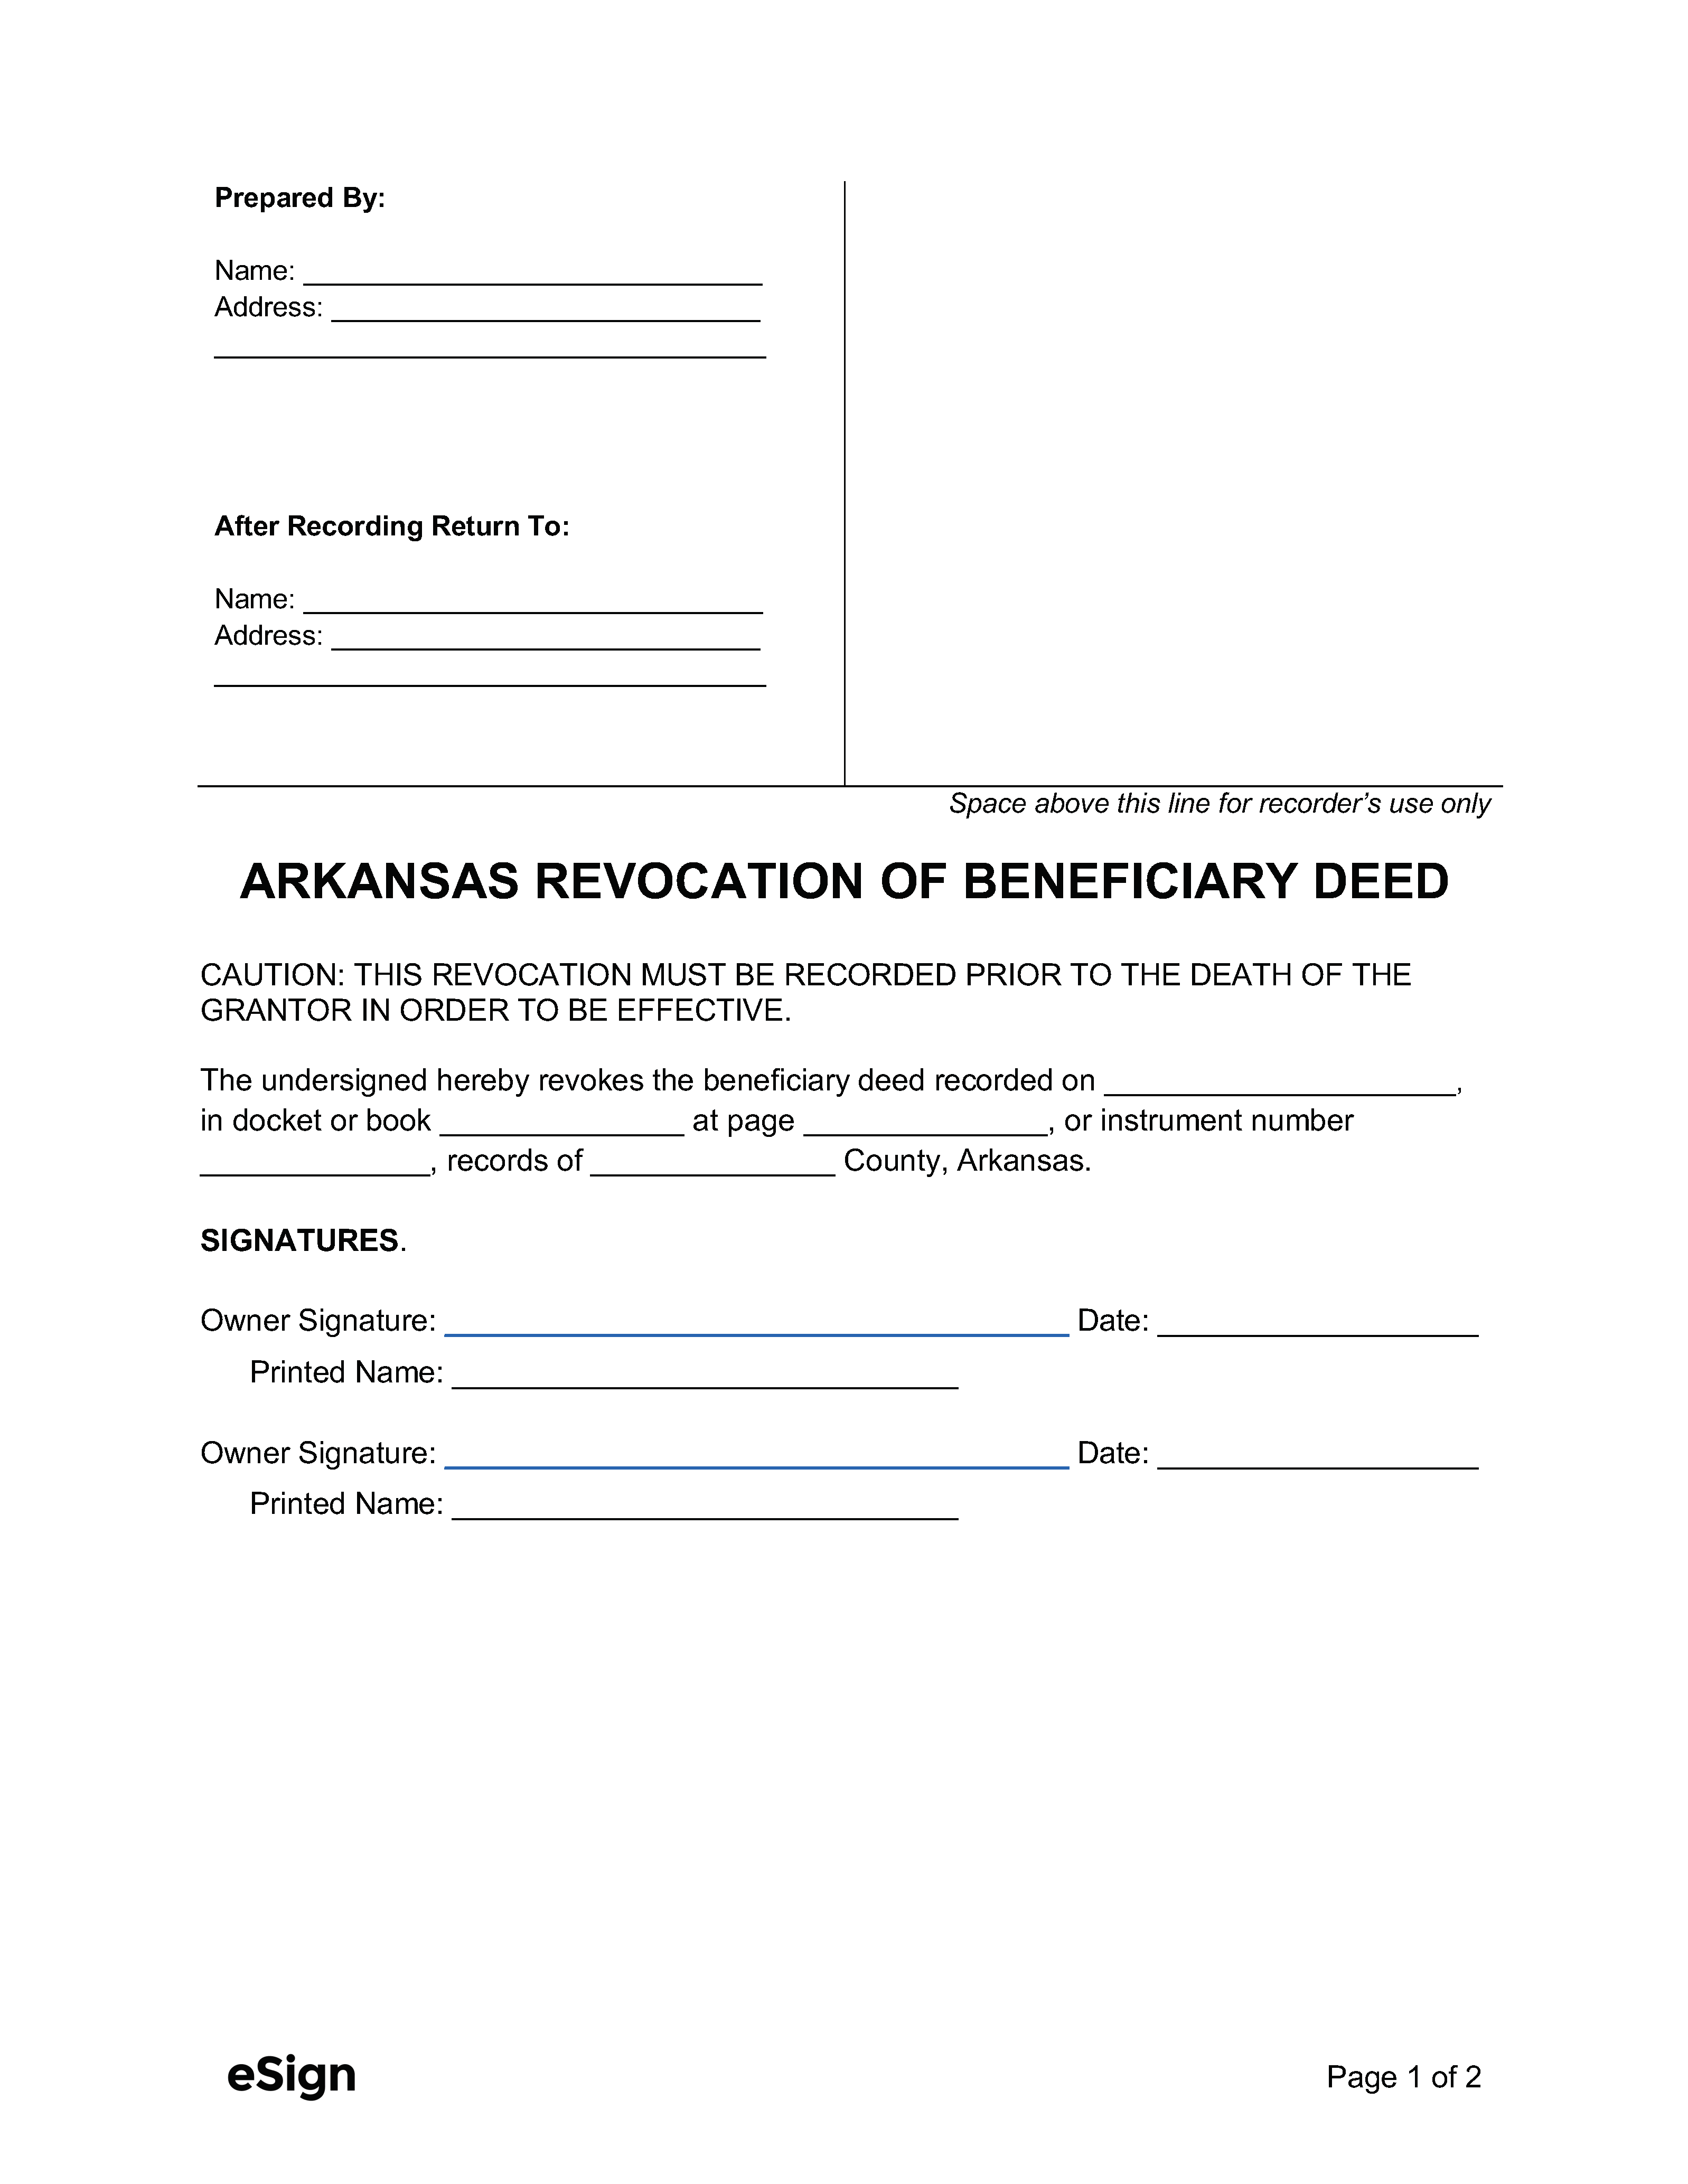 free-arkansas-beneficiary-deed-form-pdf-word